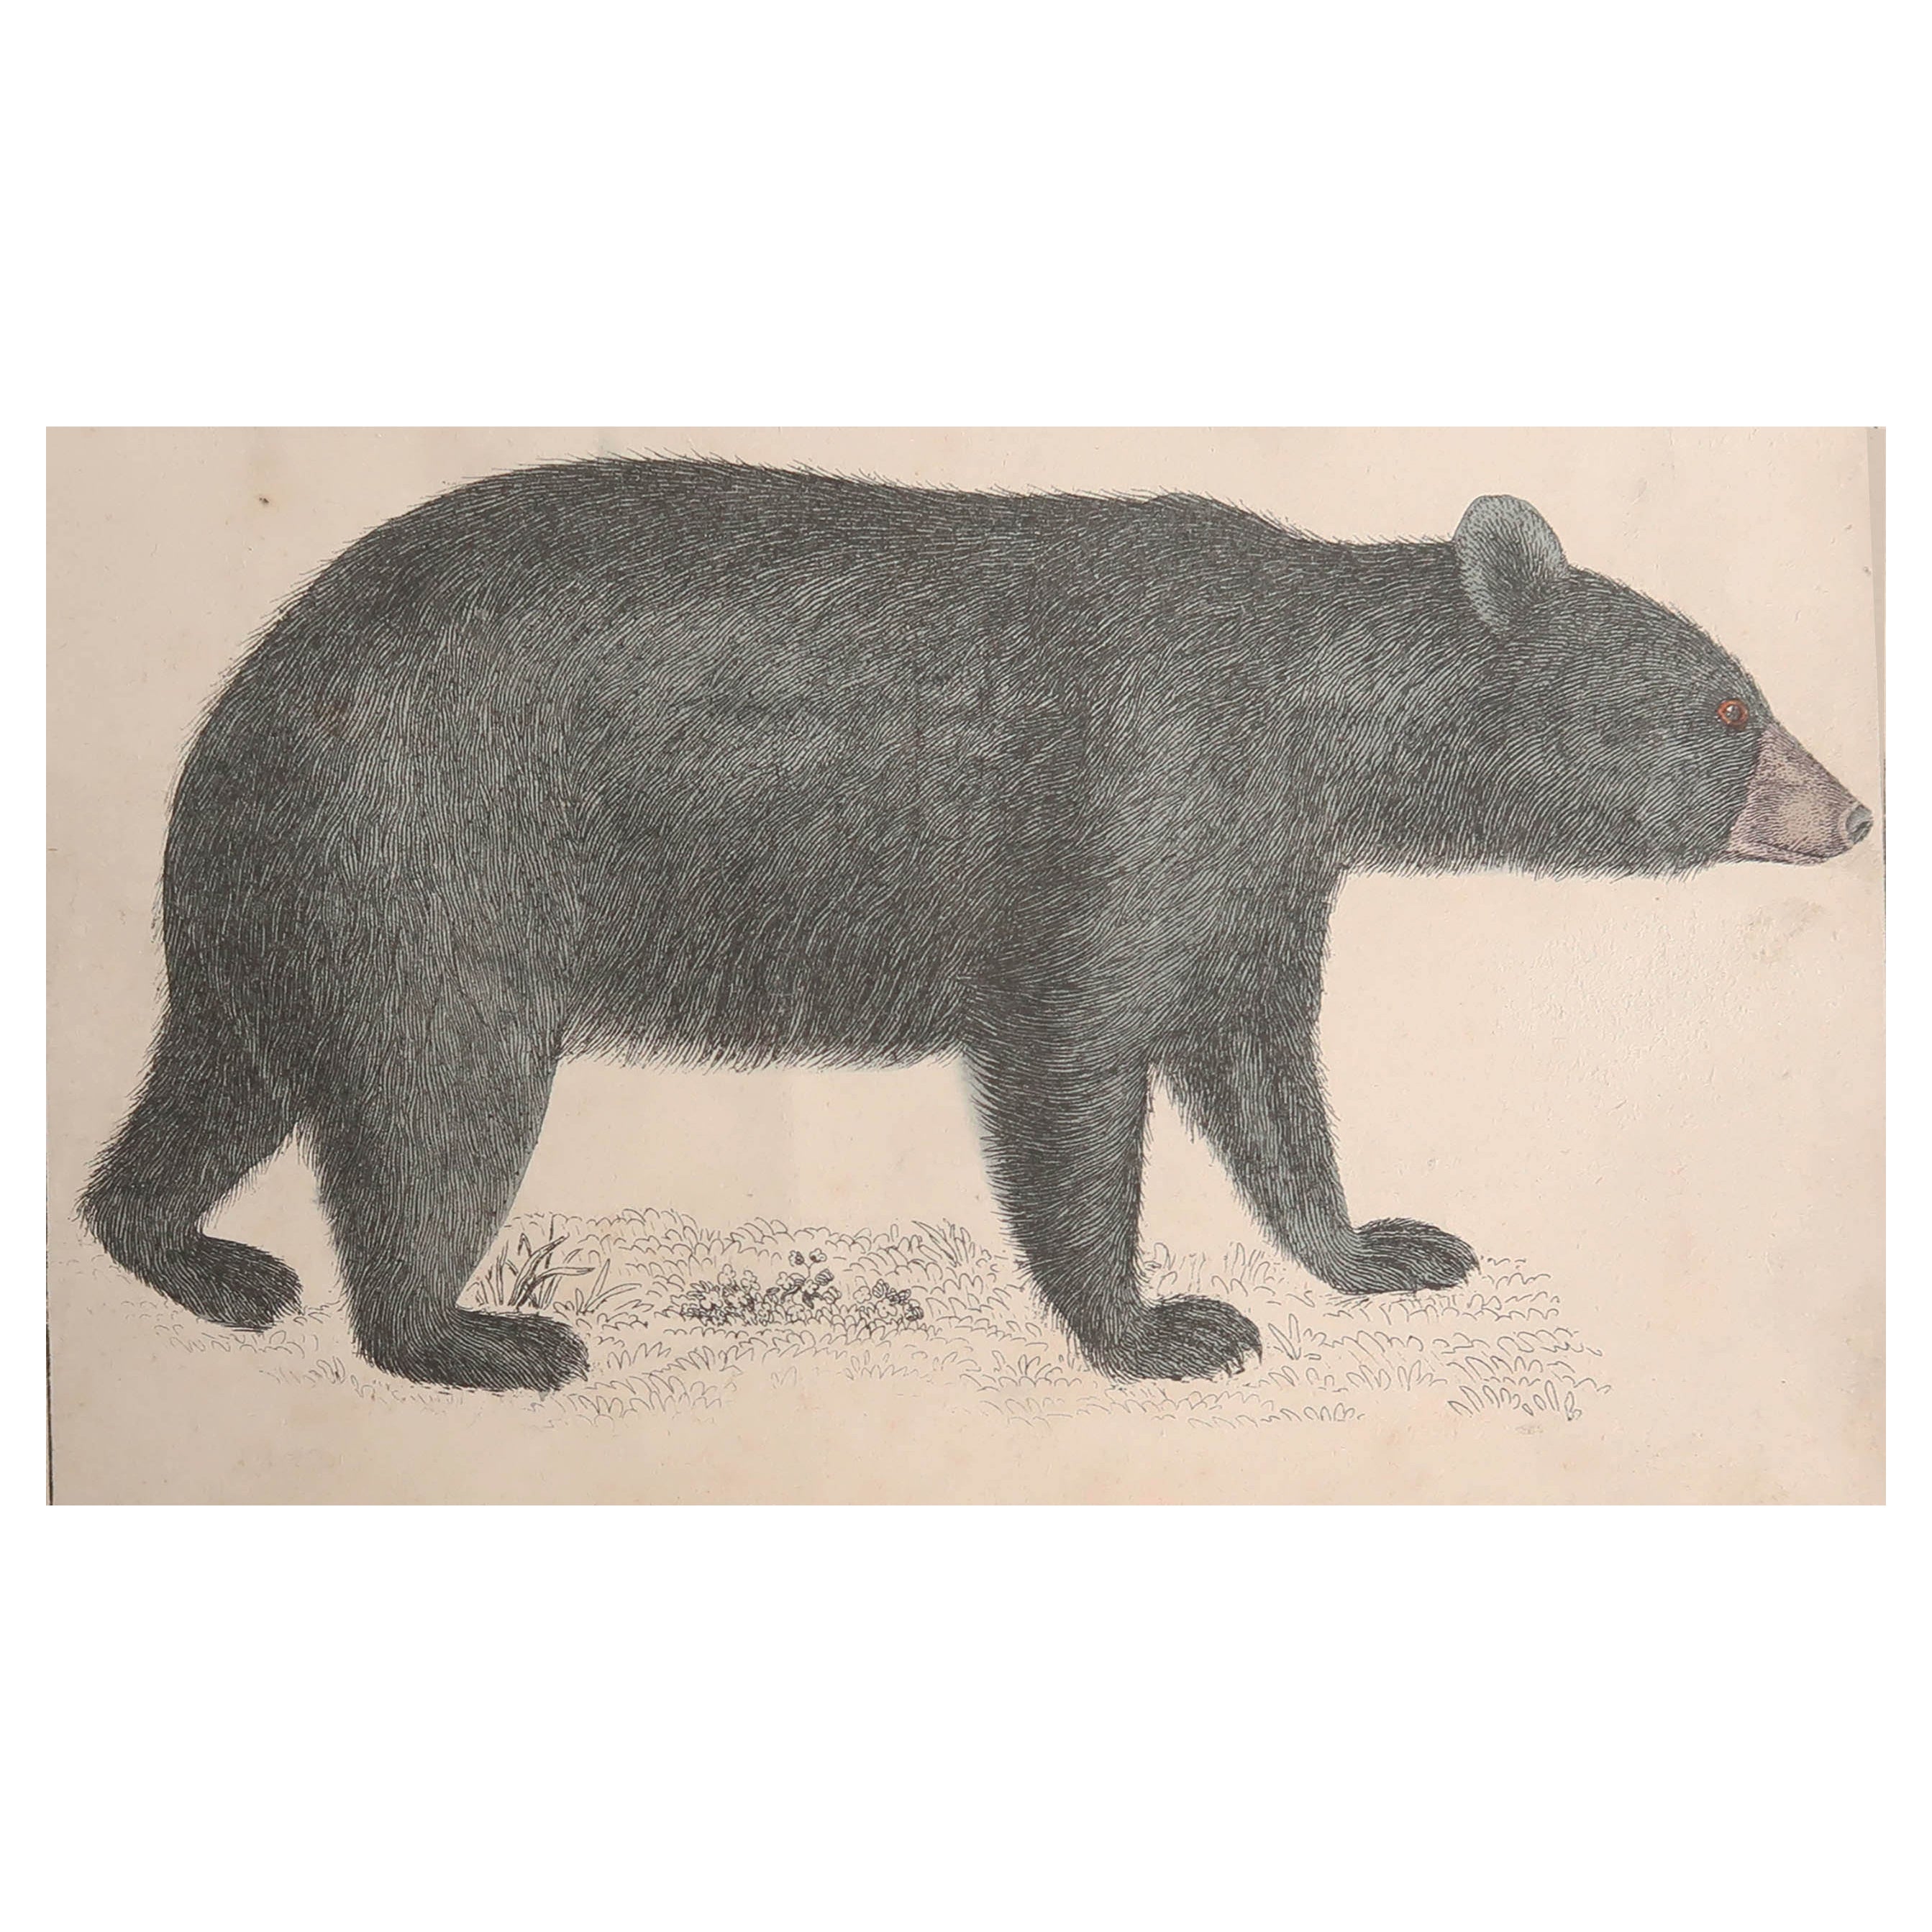 Original Antique Print of a Black Bear, 1847 'Unframed'